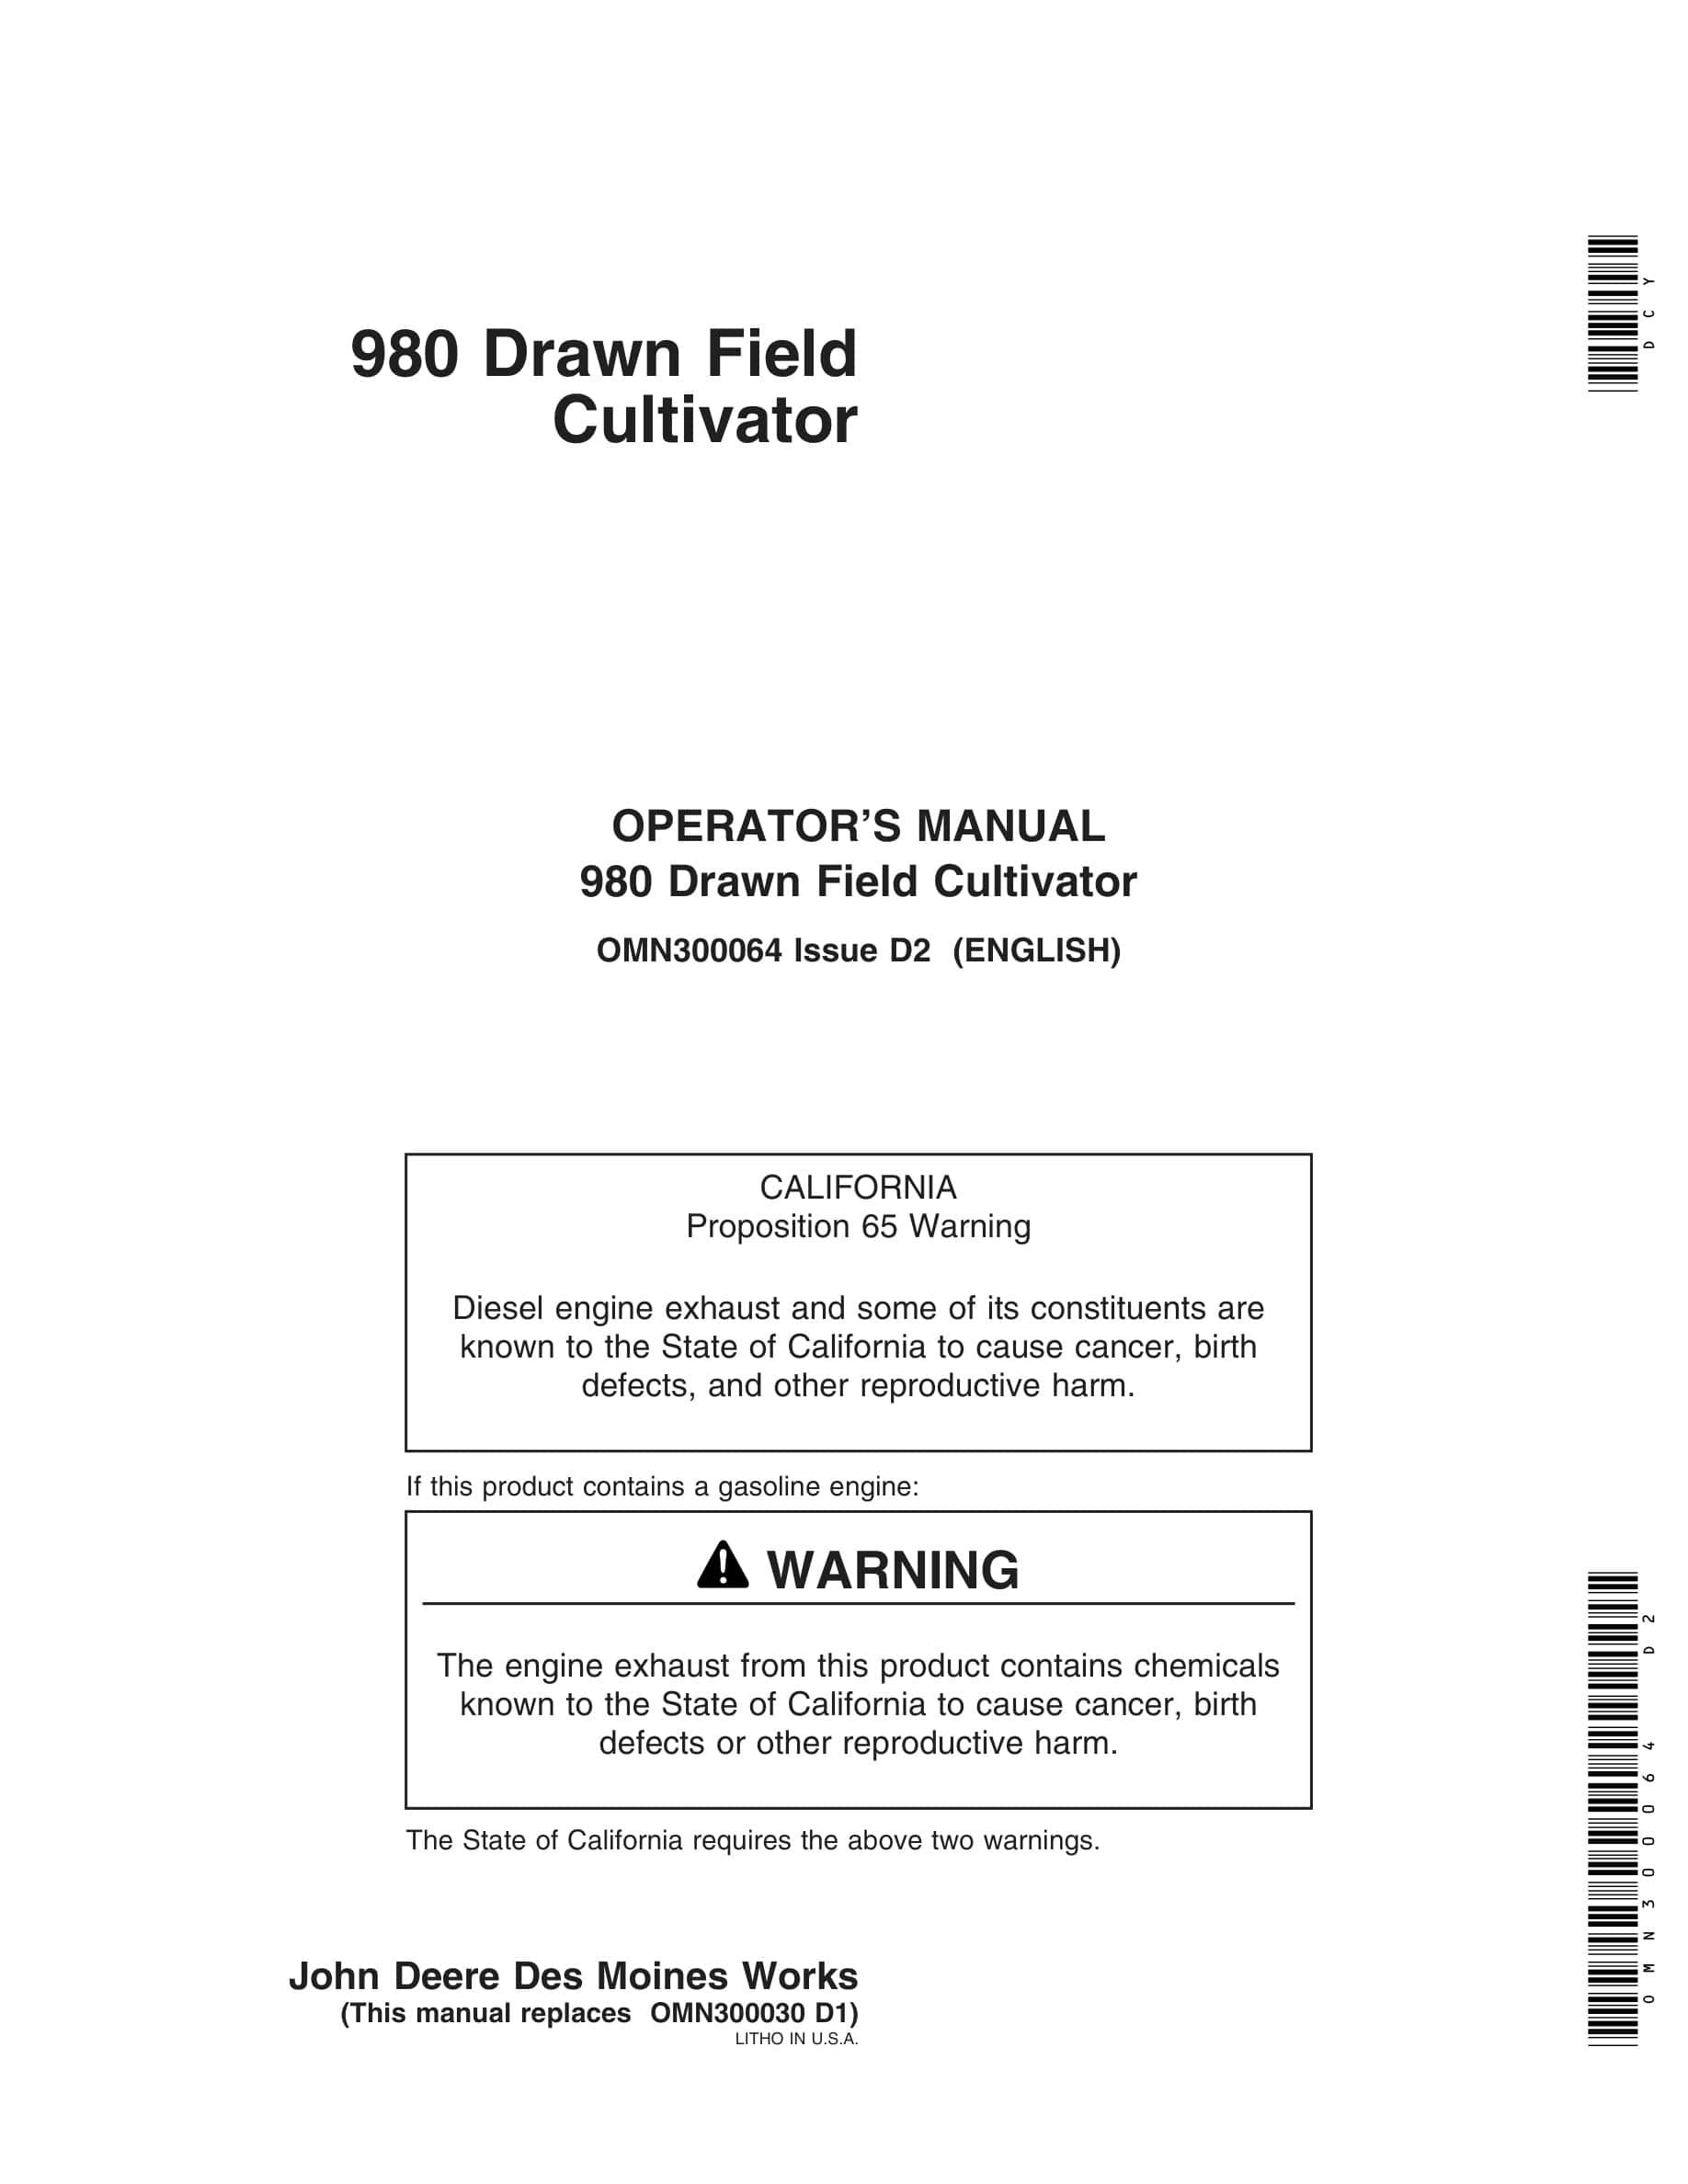 John Deere 980 Drawn Field CULTIVATOR Operator Manual OMN300064-1